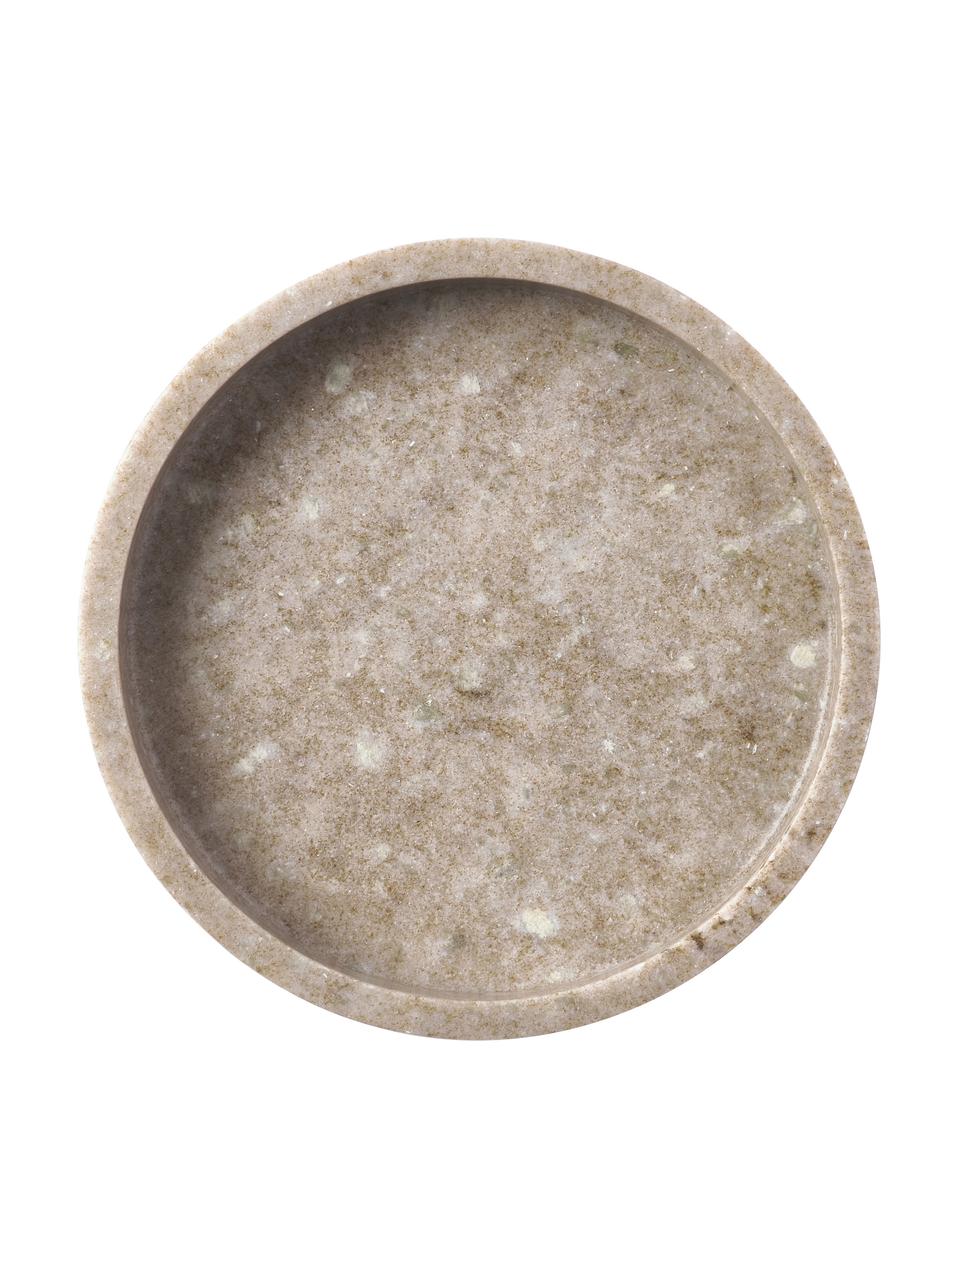 Vassoio rotondo decorativo in marmo marrone Venezia, Marmo, Marrone, Ø 25 cm